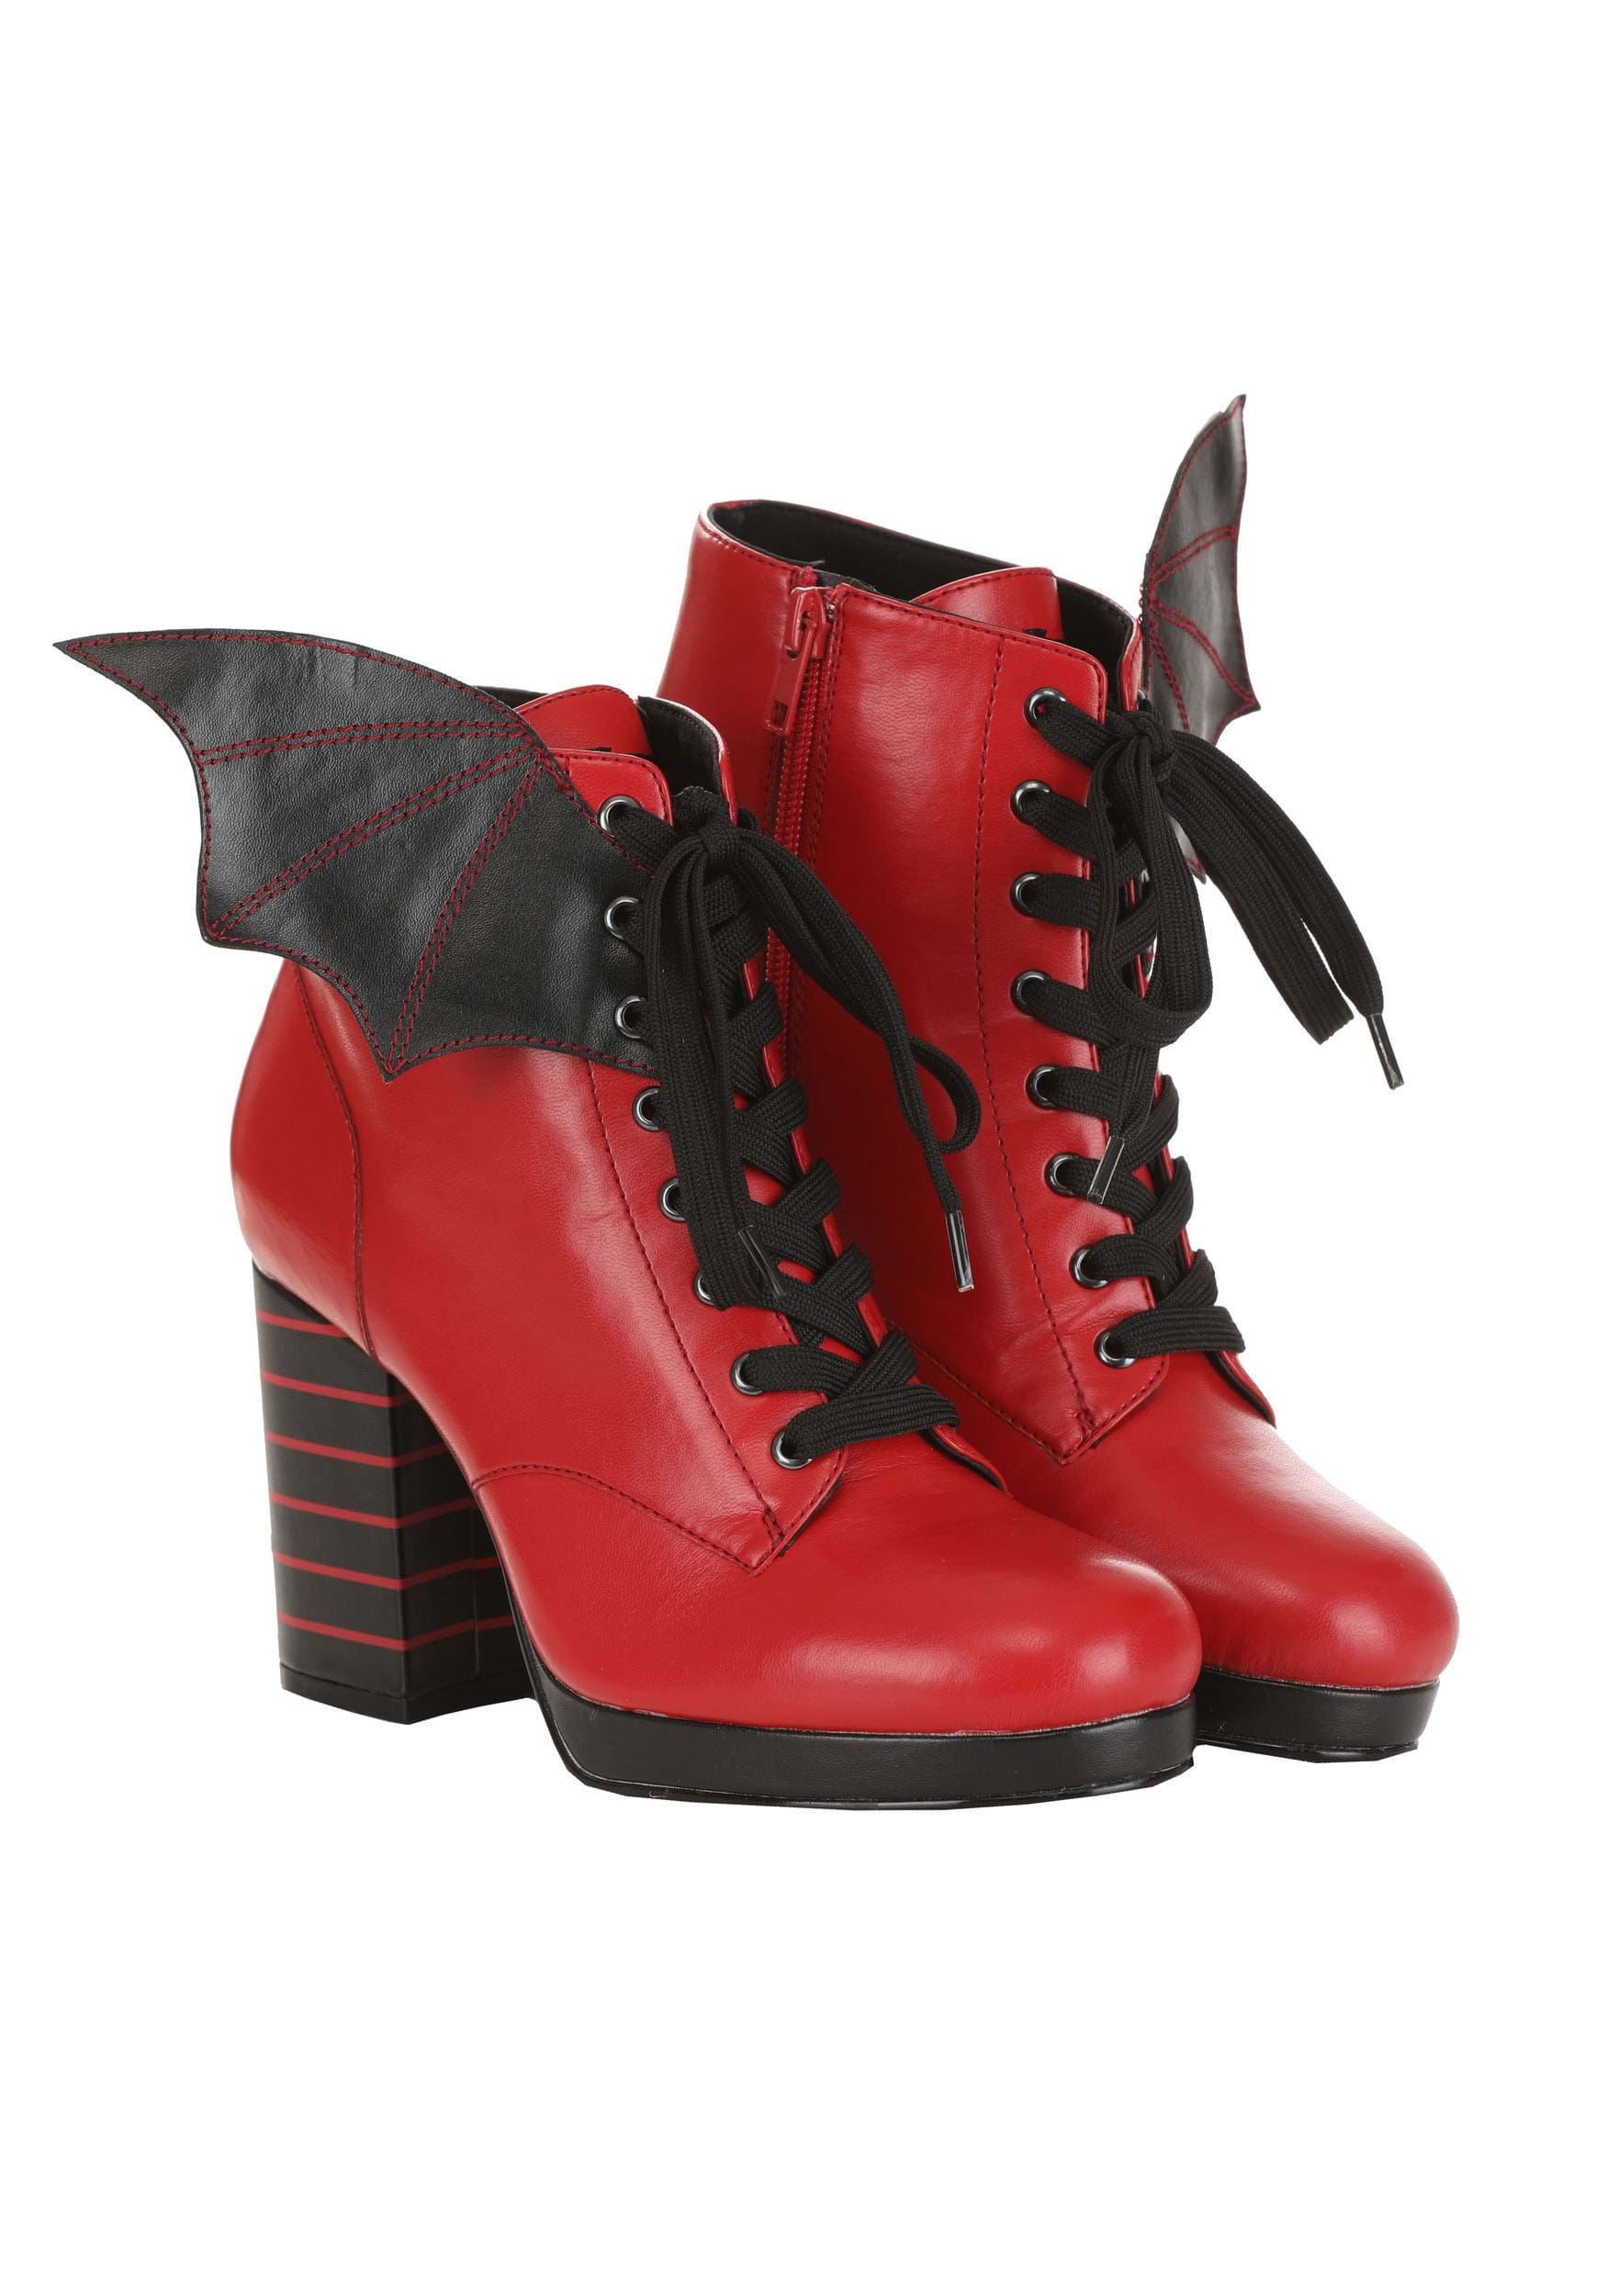 Image of Mavis Hotel Transylvania Heeled Boots for Women ID FUN4051AD-5